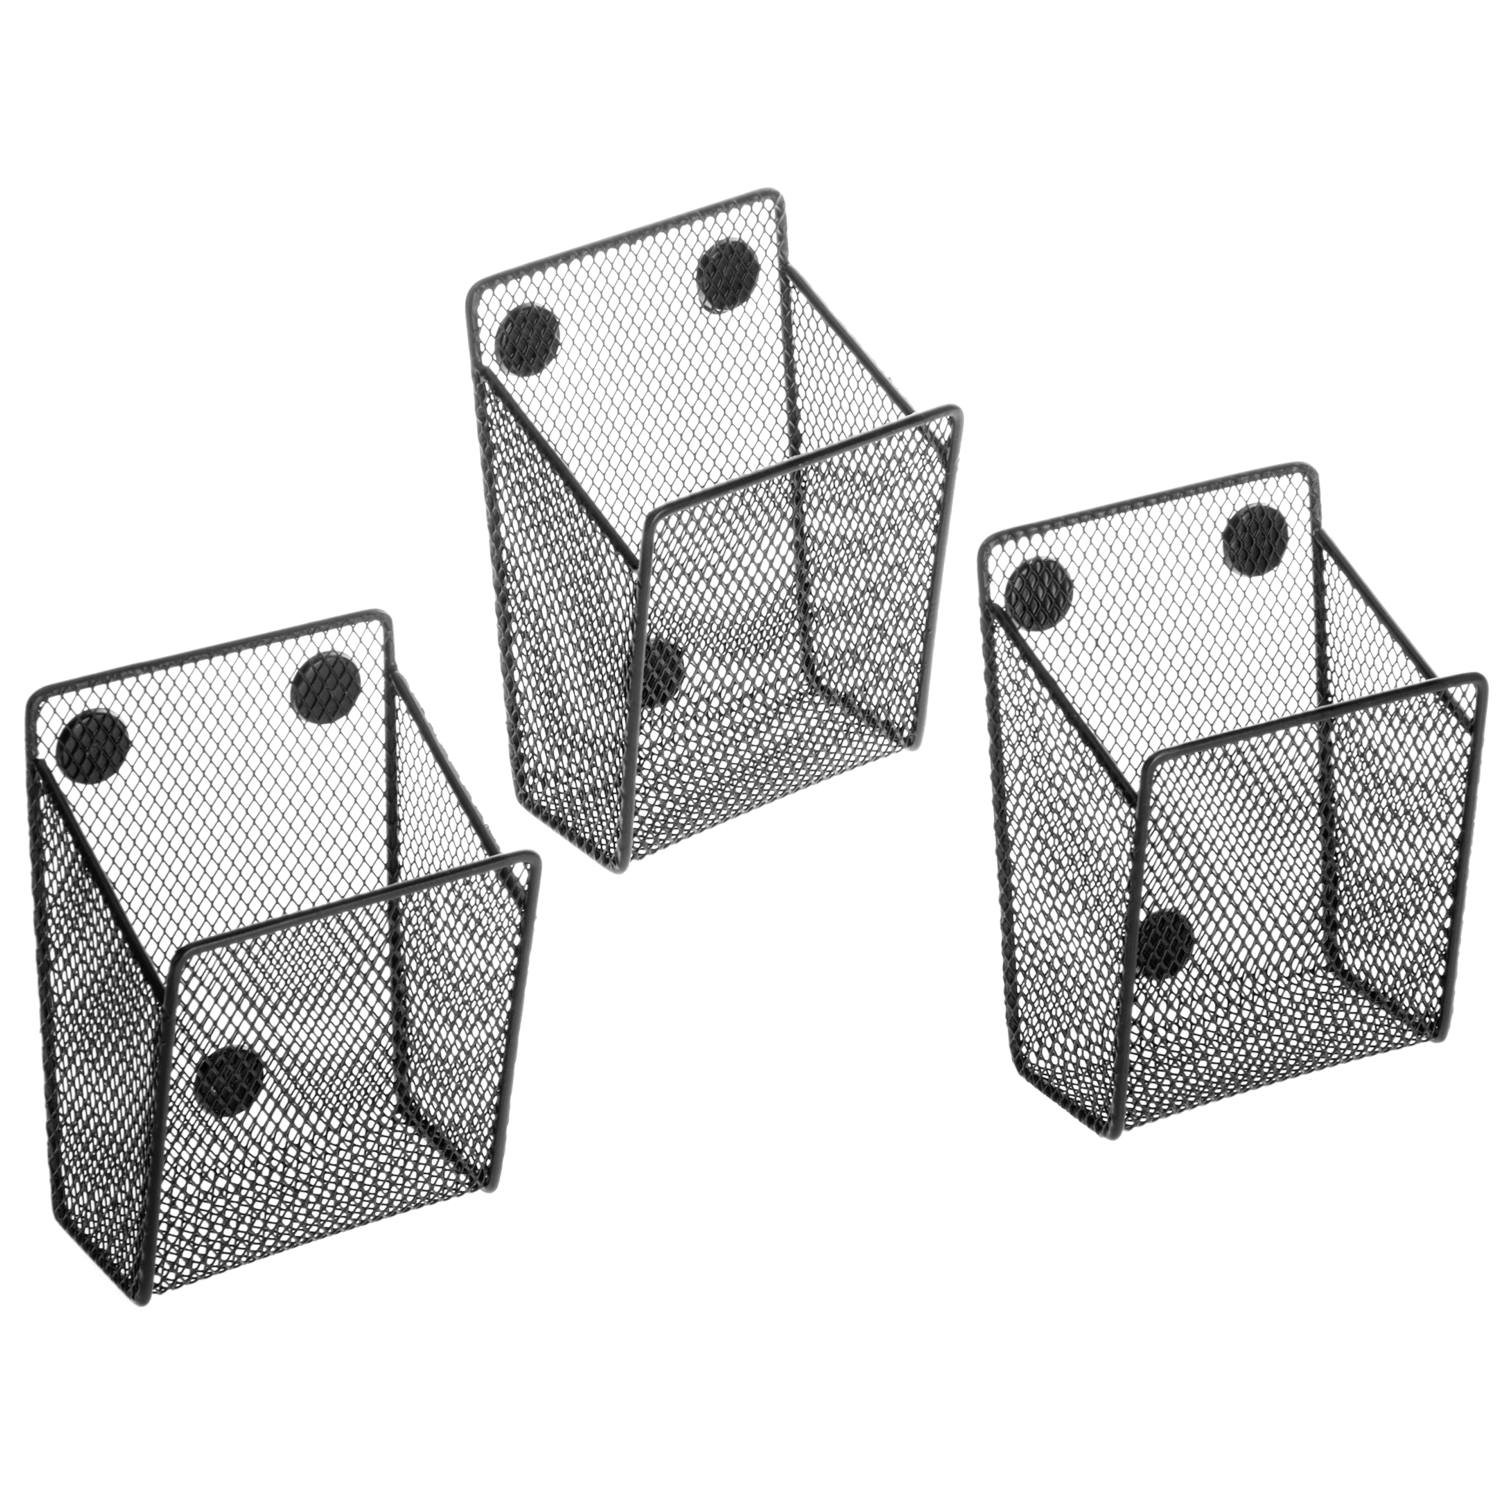 MyGift White Mesh Magnetic Storage Baskets, Office Supply Organizer, Set of 3